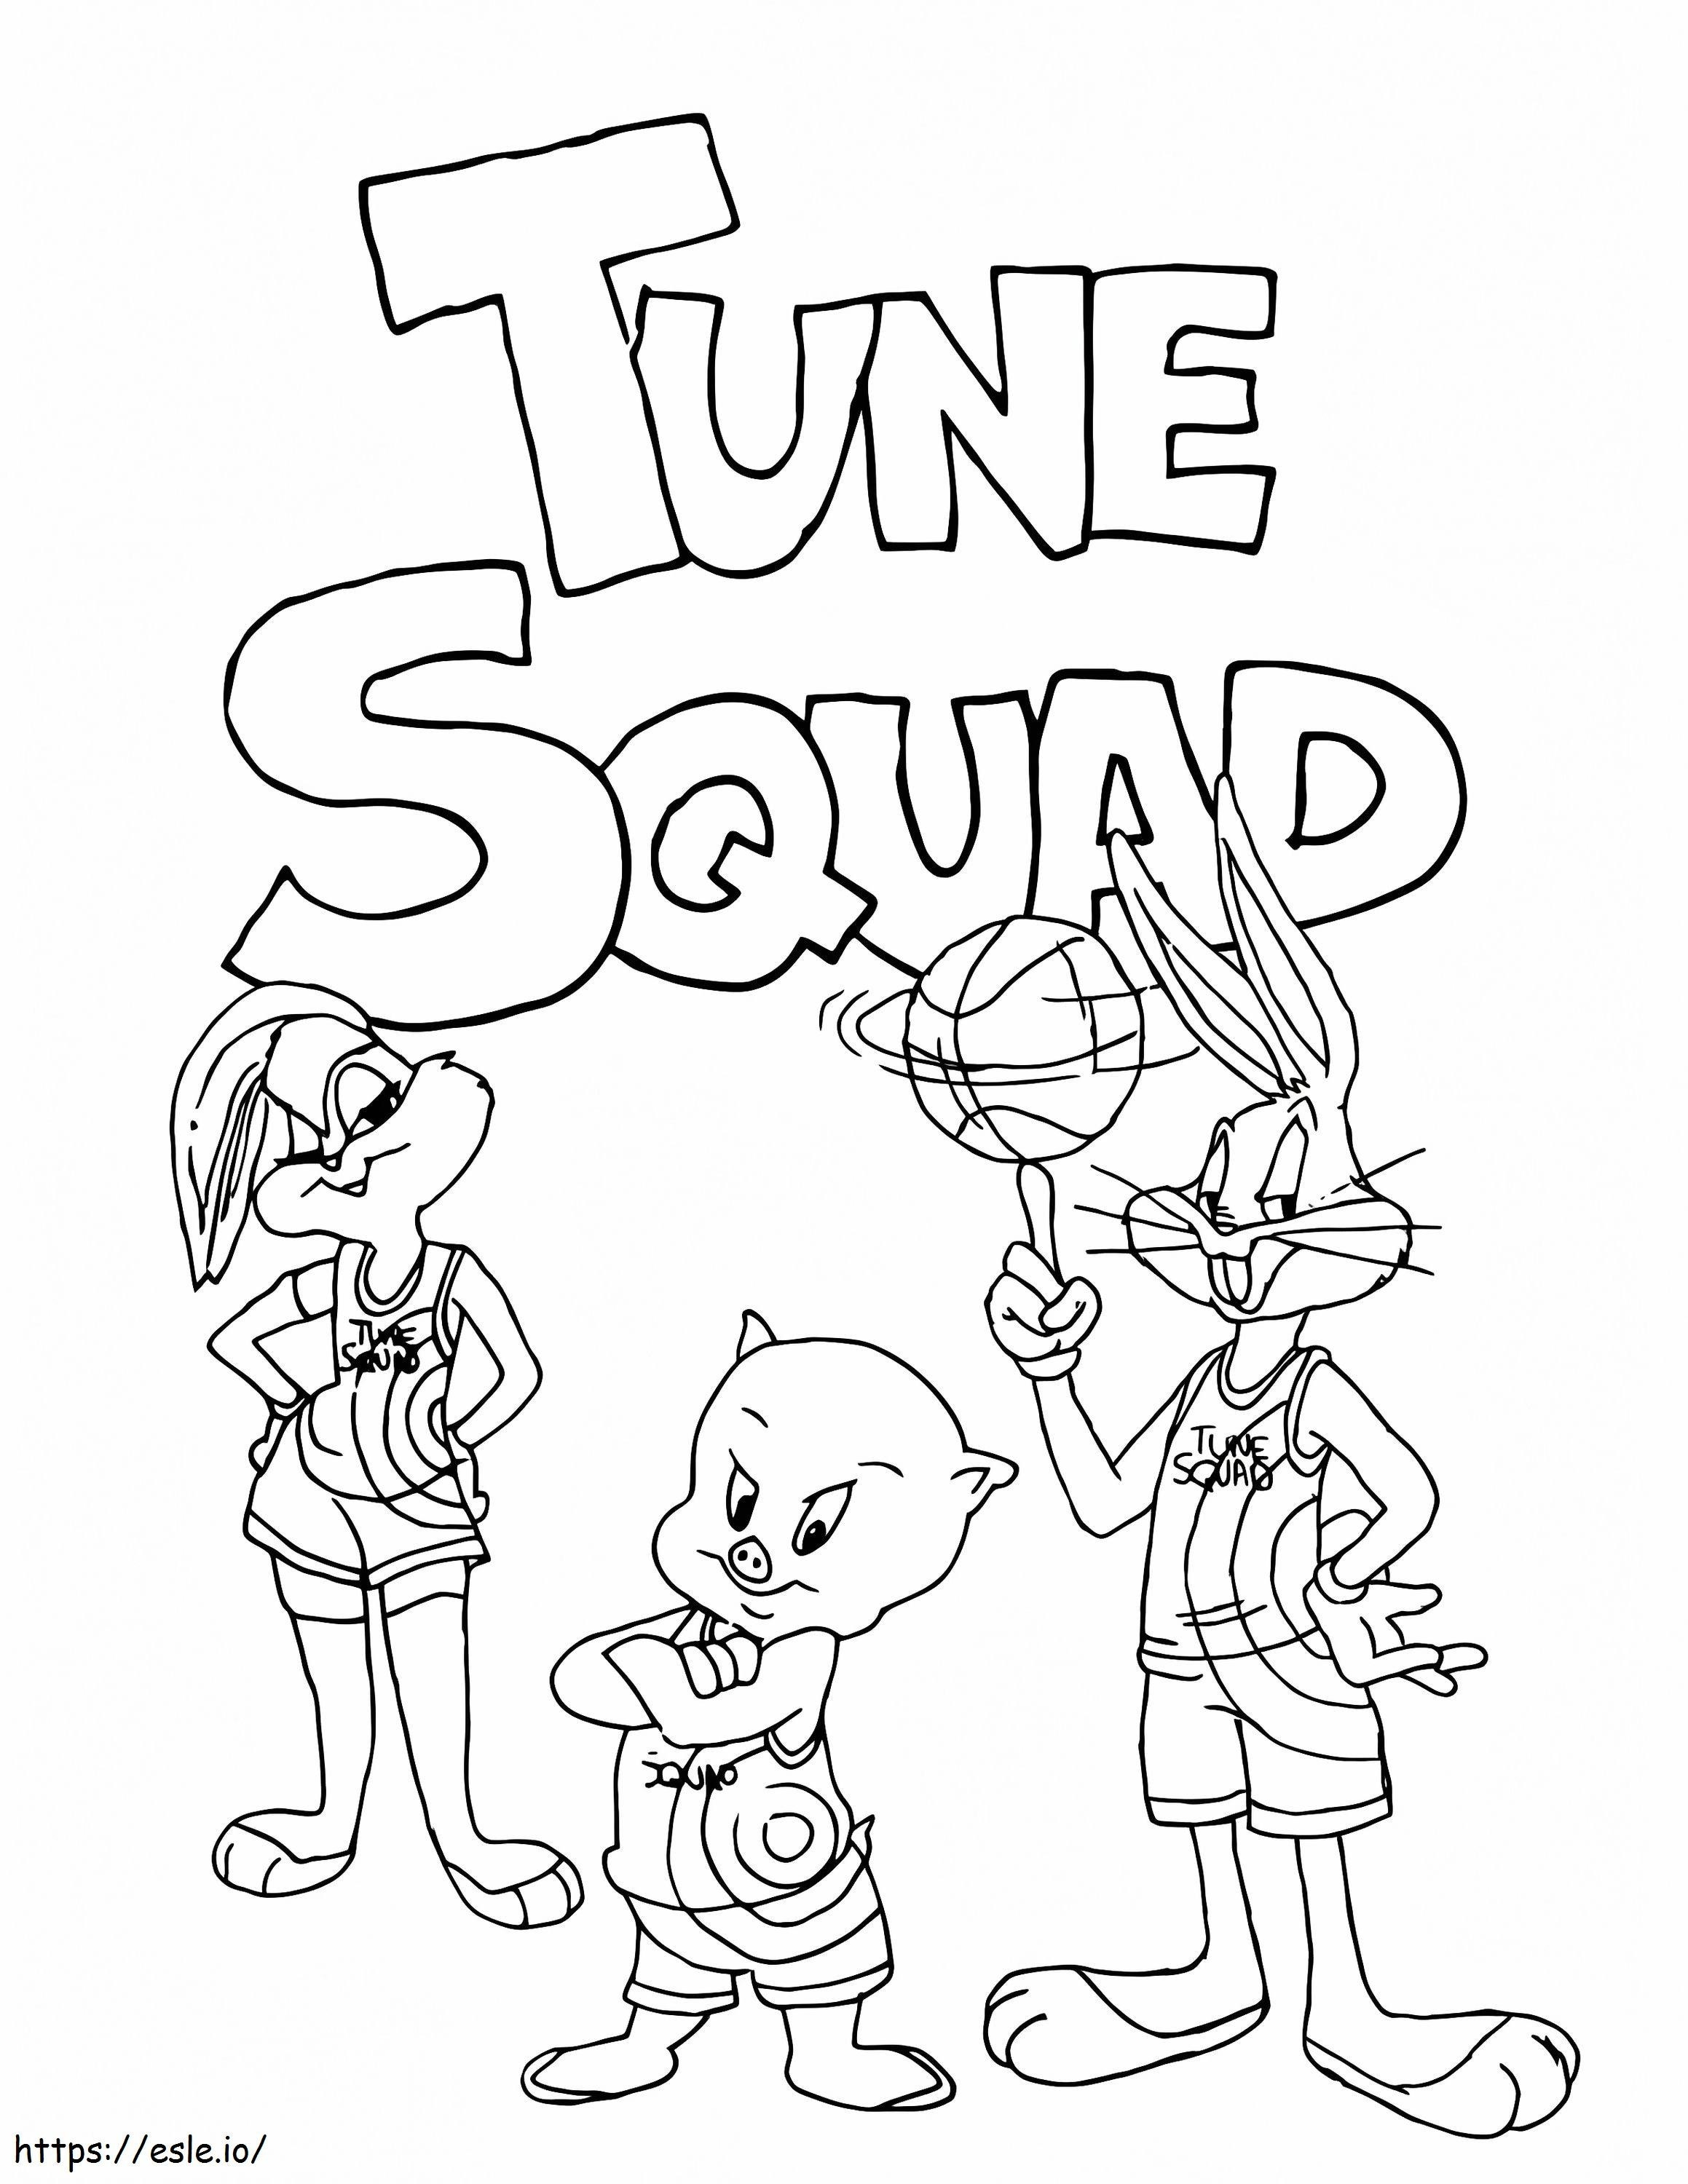 Tune Squad Space Jam värityskuva